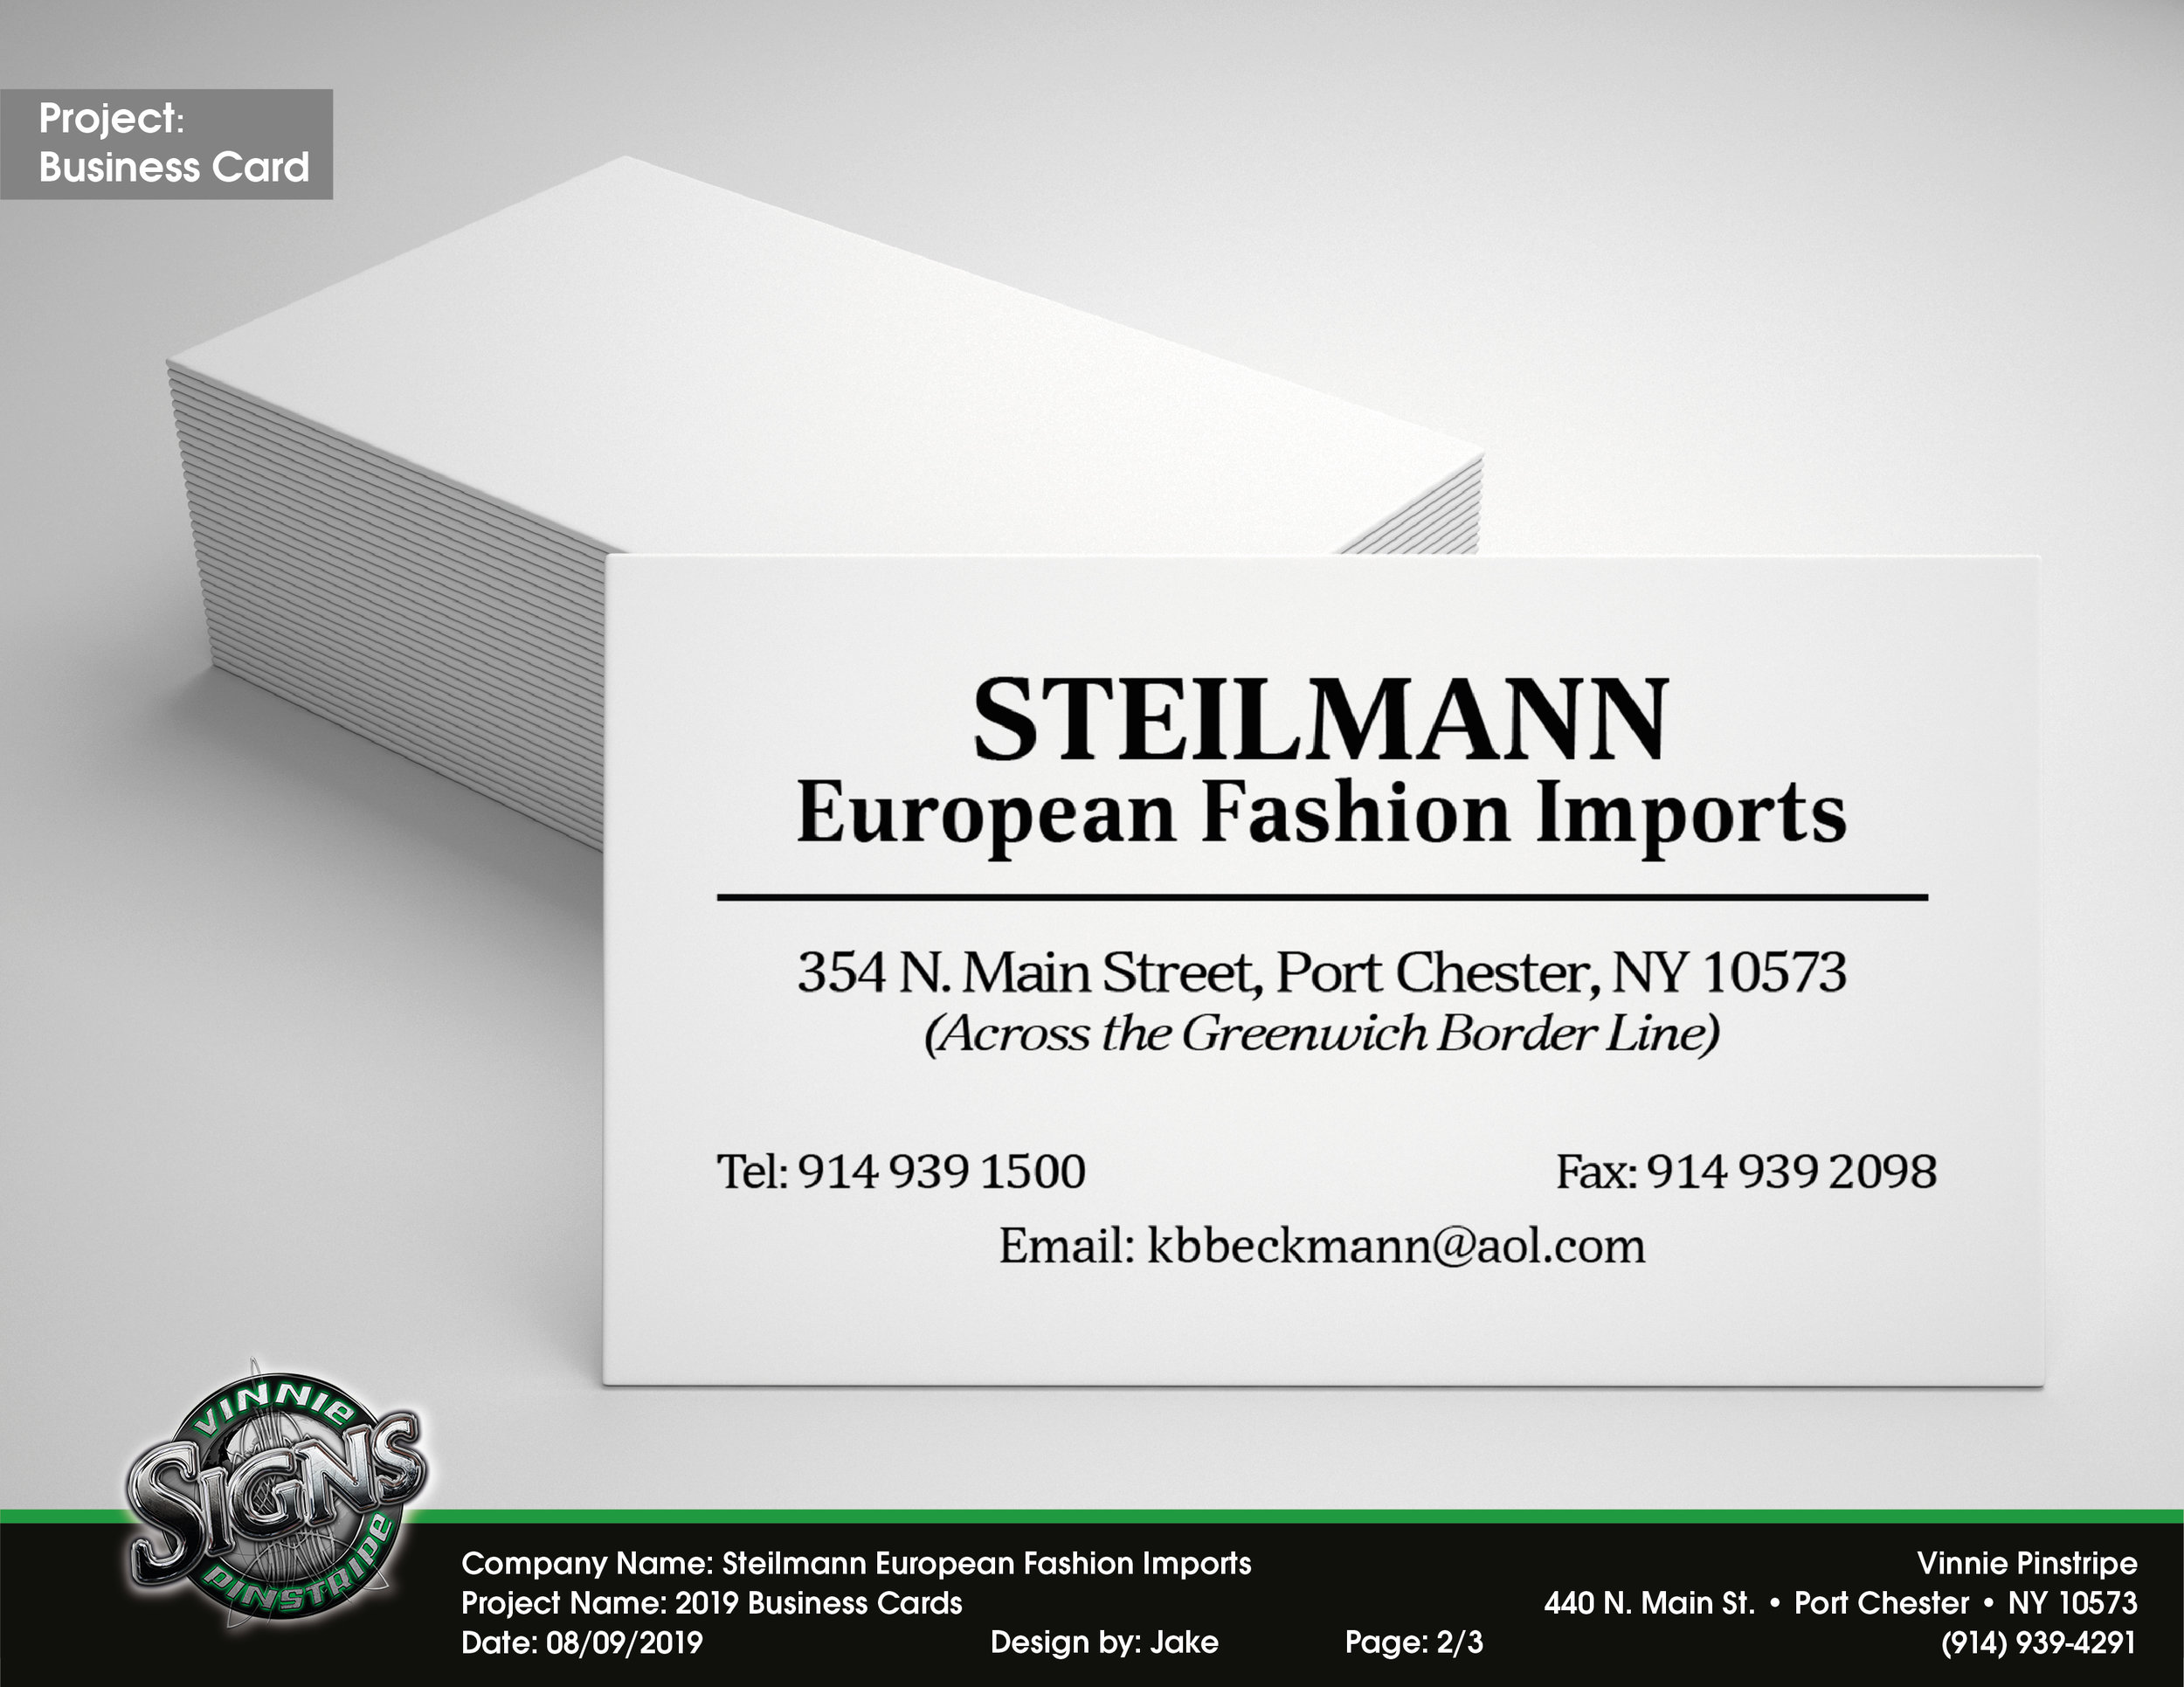 Stielmann Business Card Design Port Chester, NY.jpg